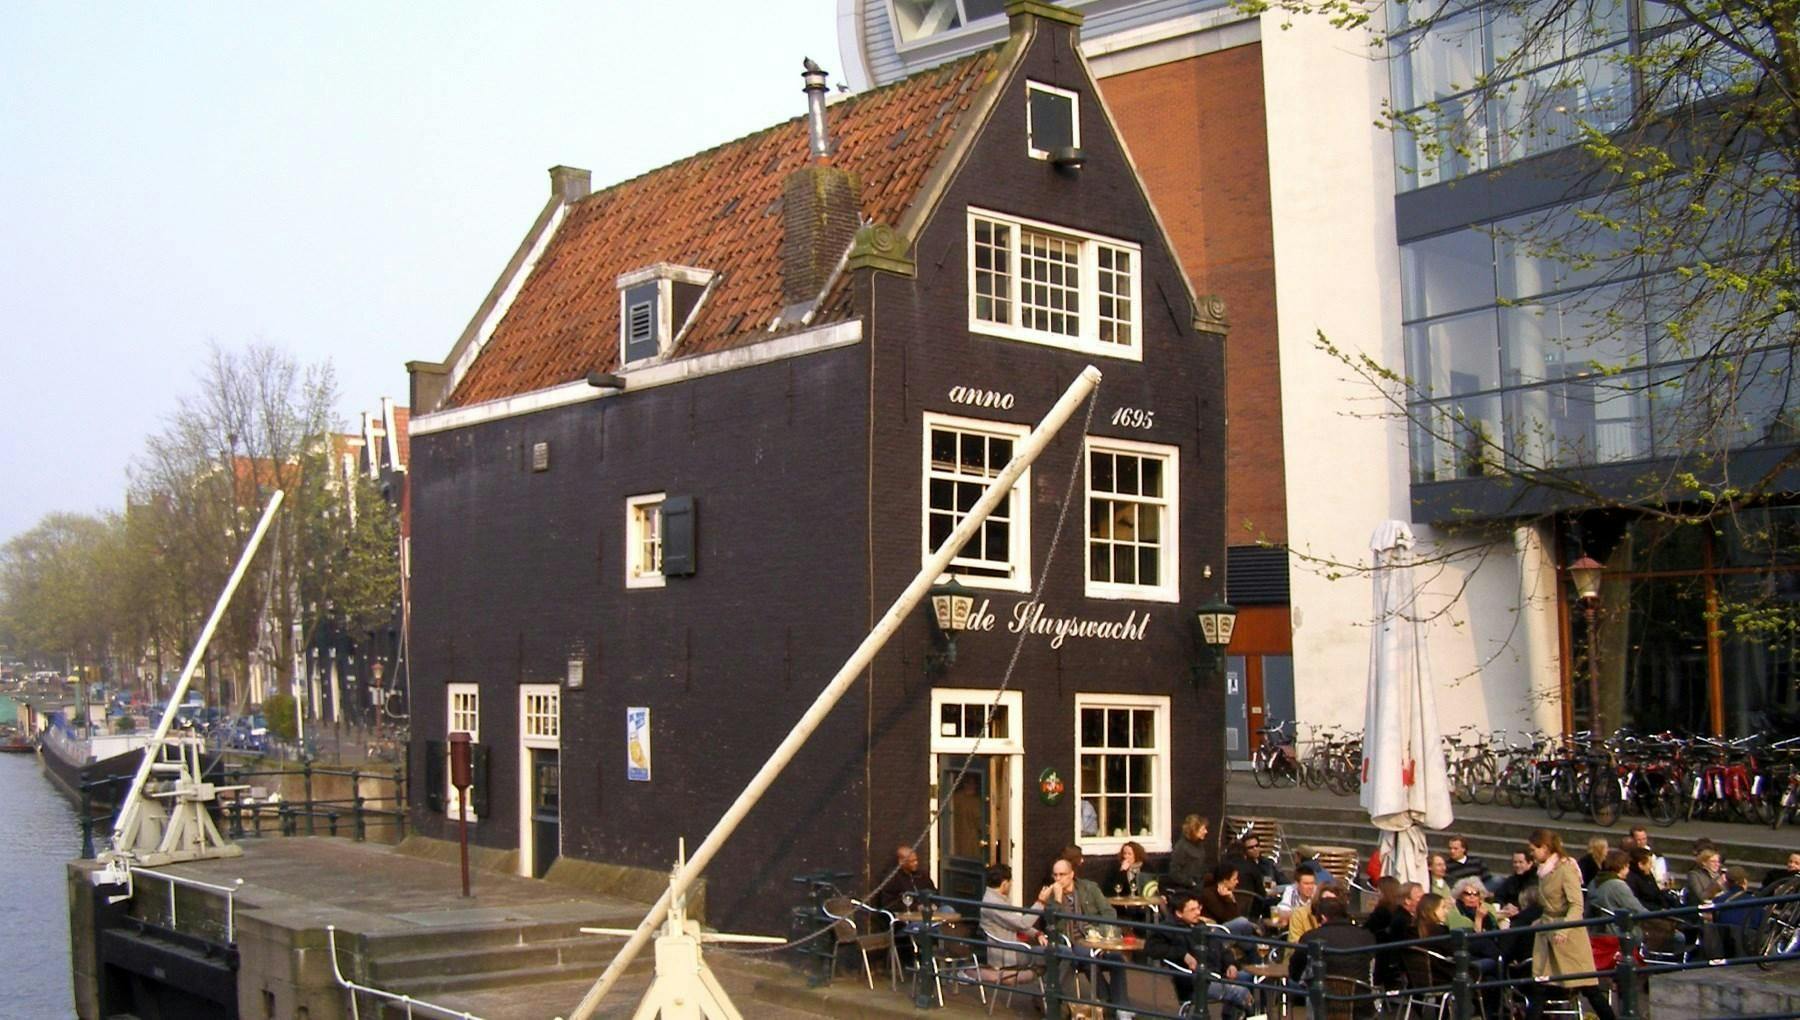 Restaurant de Sluyswacht by the canal